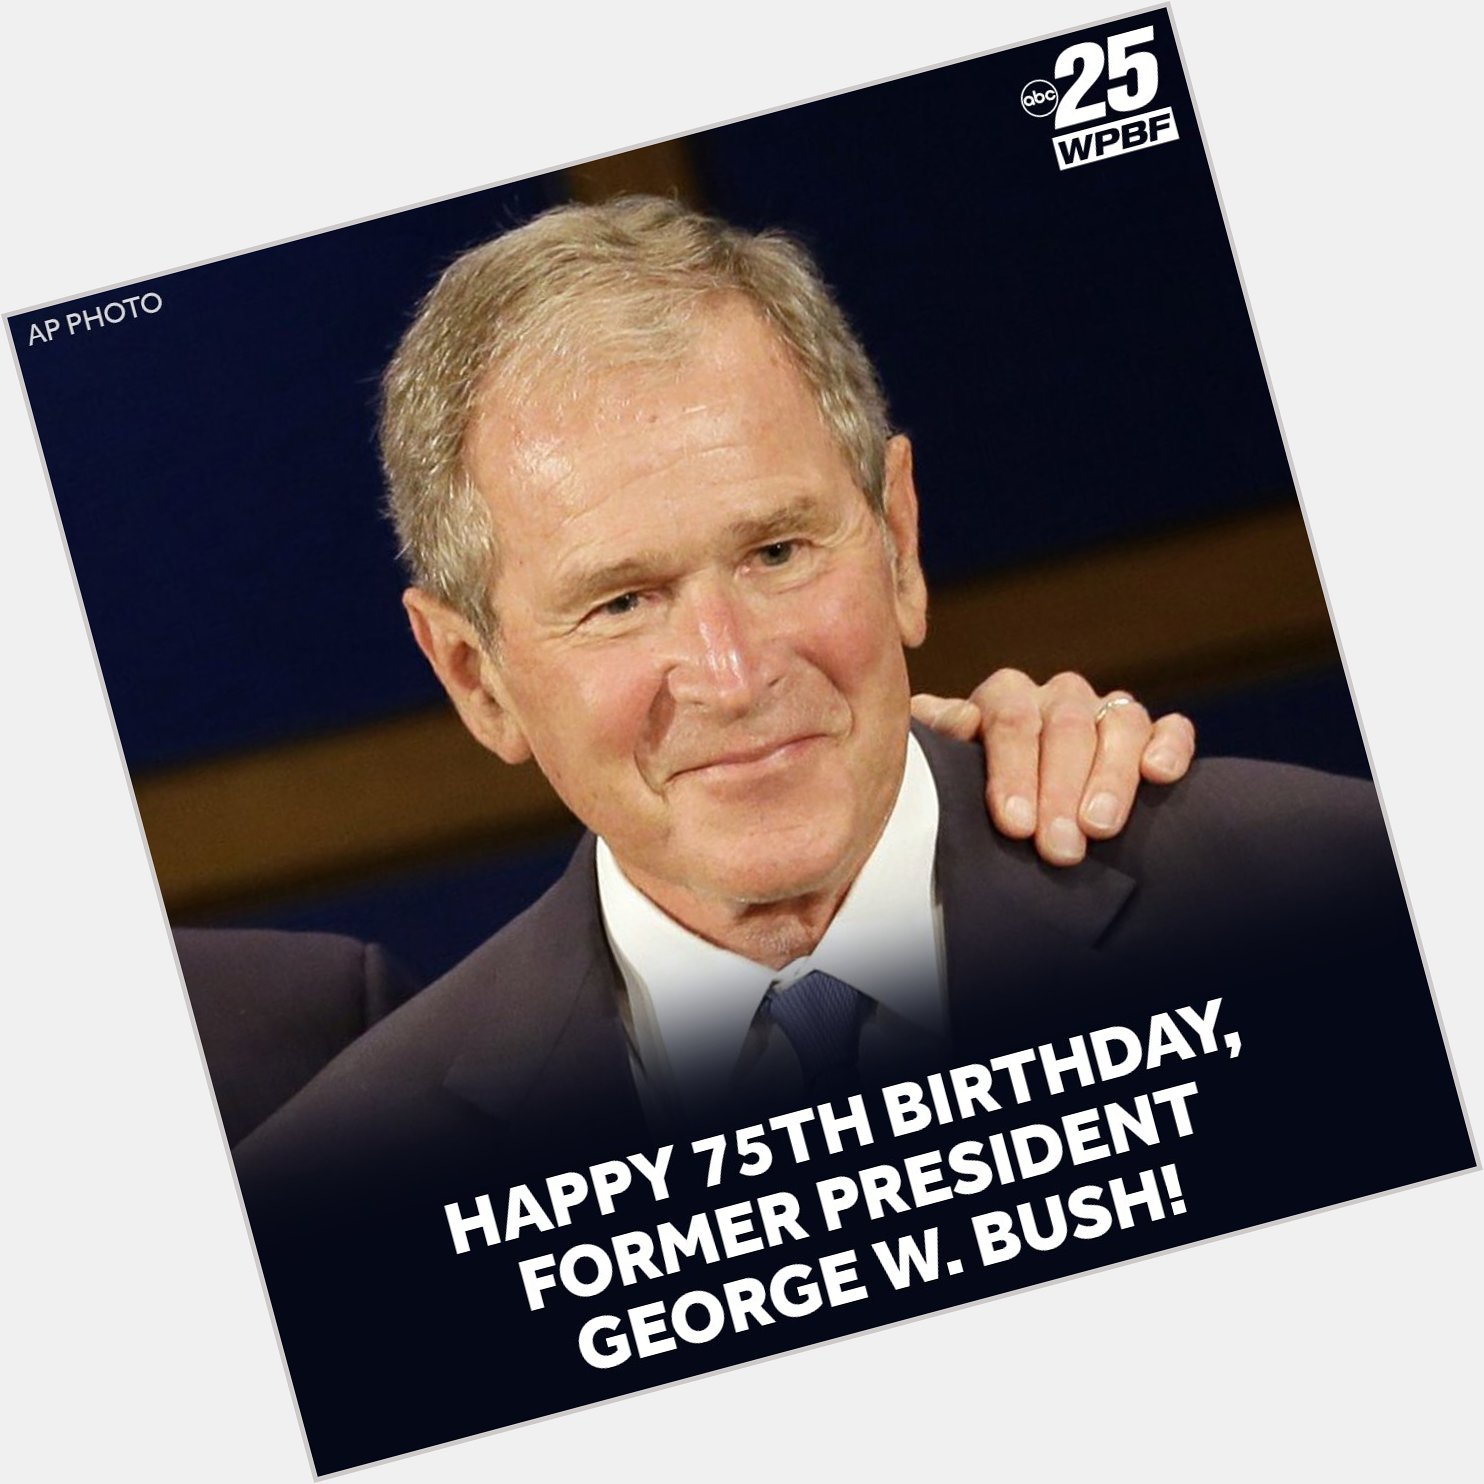  HAPPY BIRTHDAY! Former President George W. Bush celebrates his 75th birthday today! 